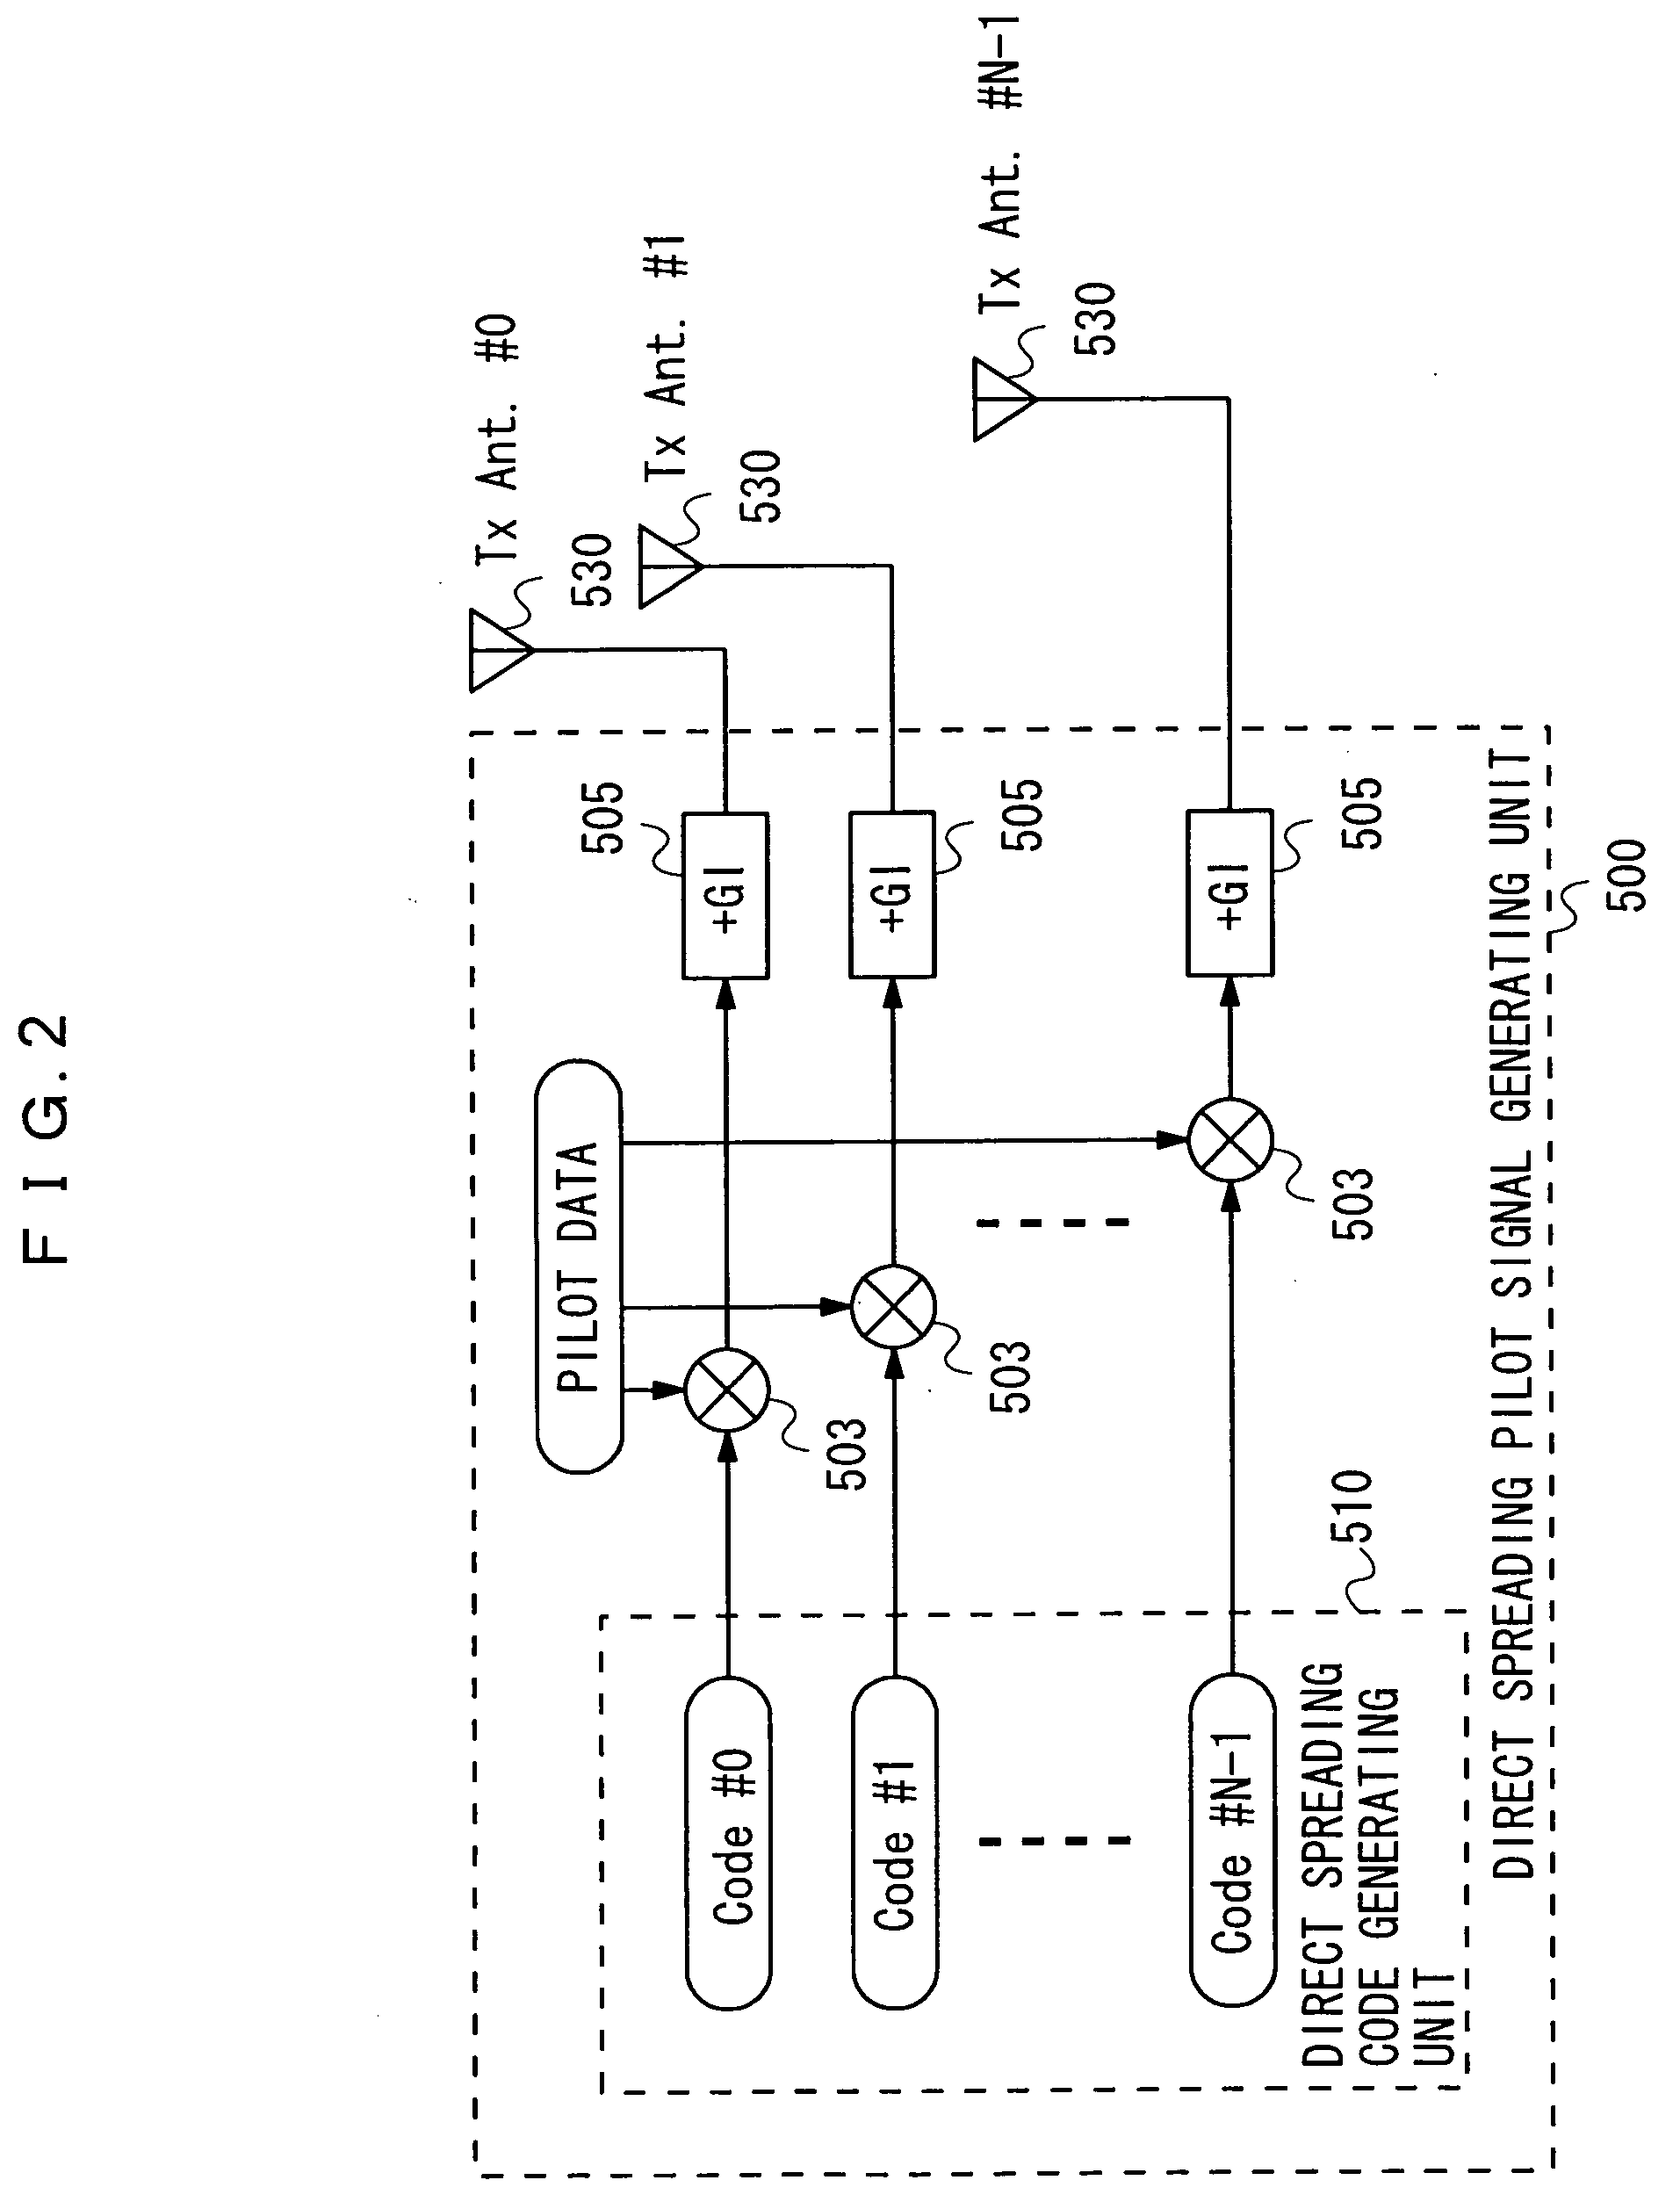 MIMO-OFDM transmitter